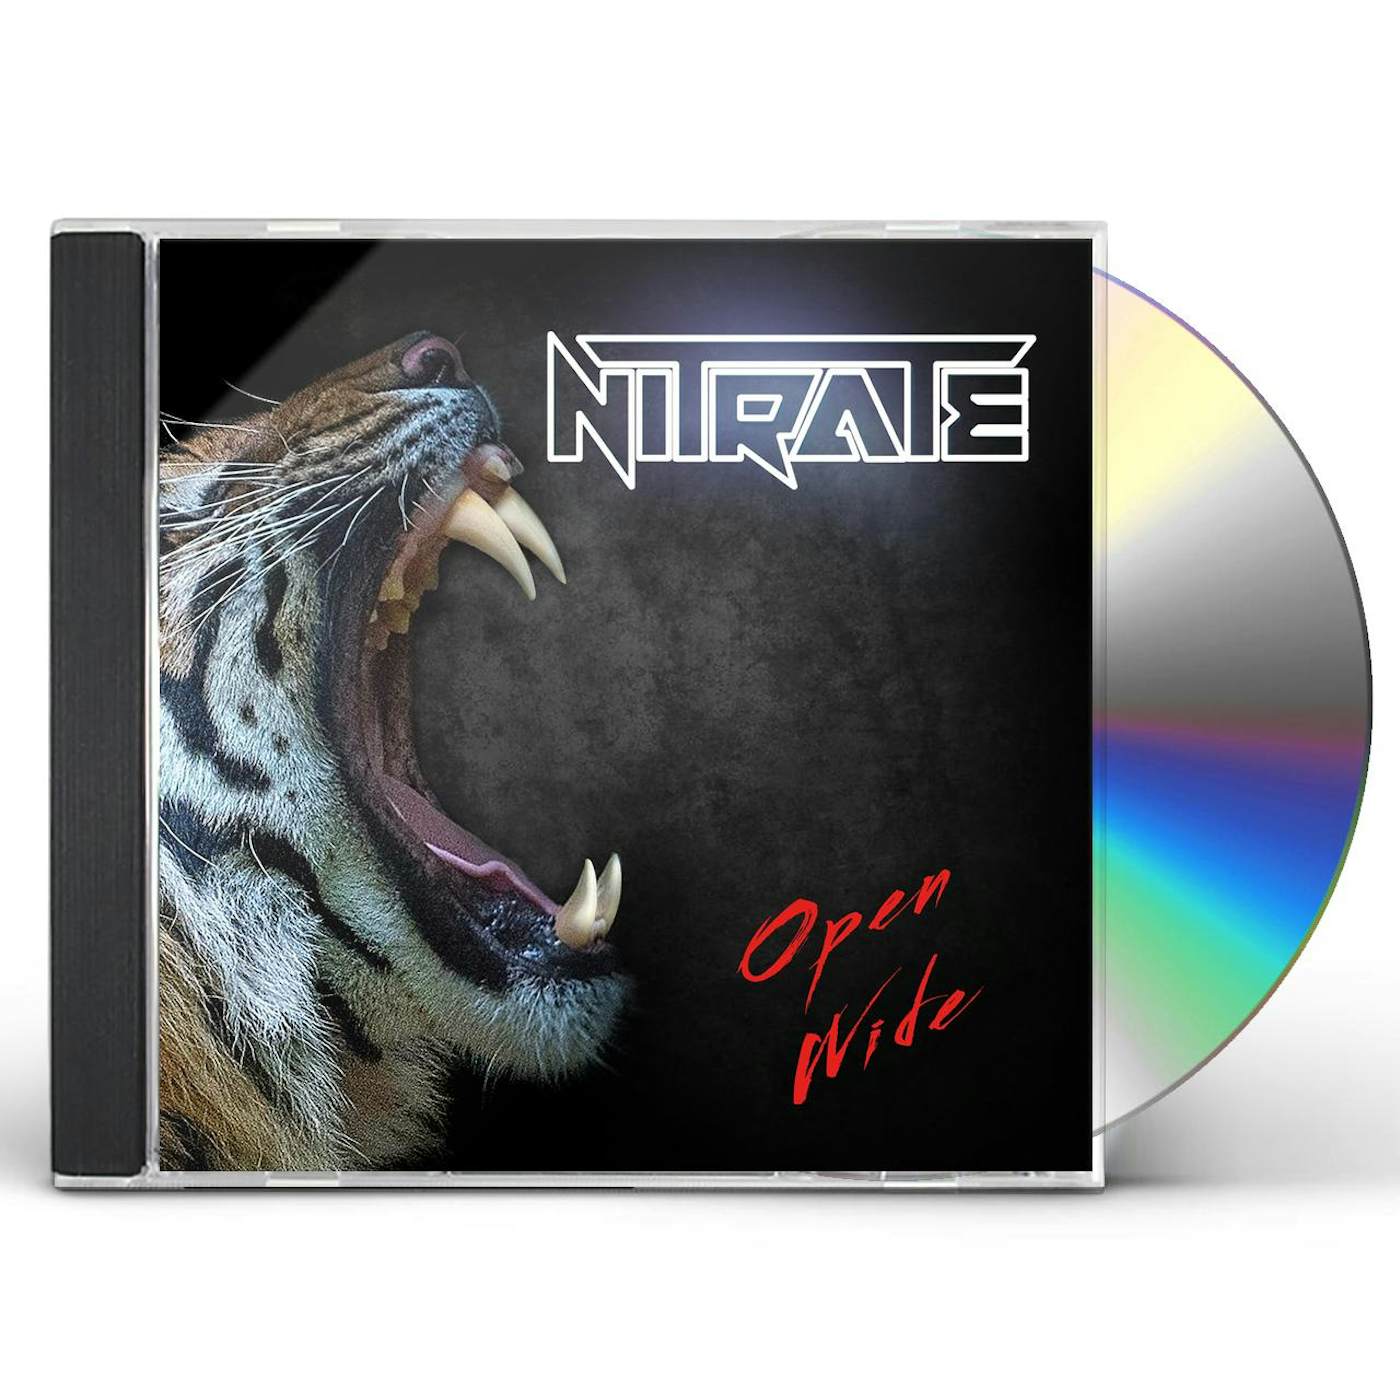 Nitrate OPEN WIDE CD